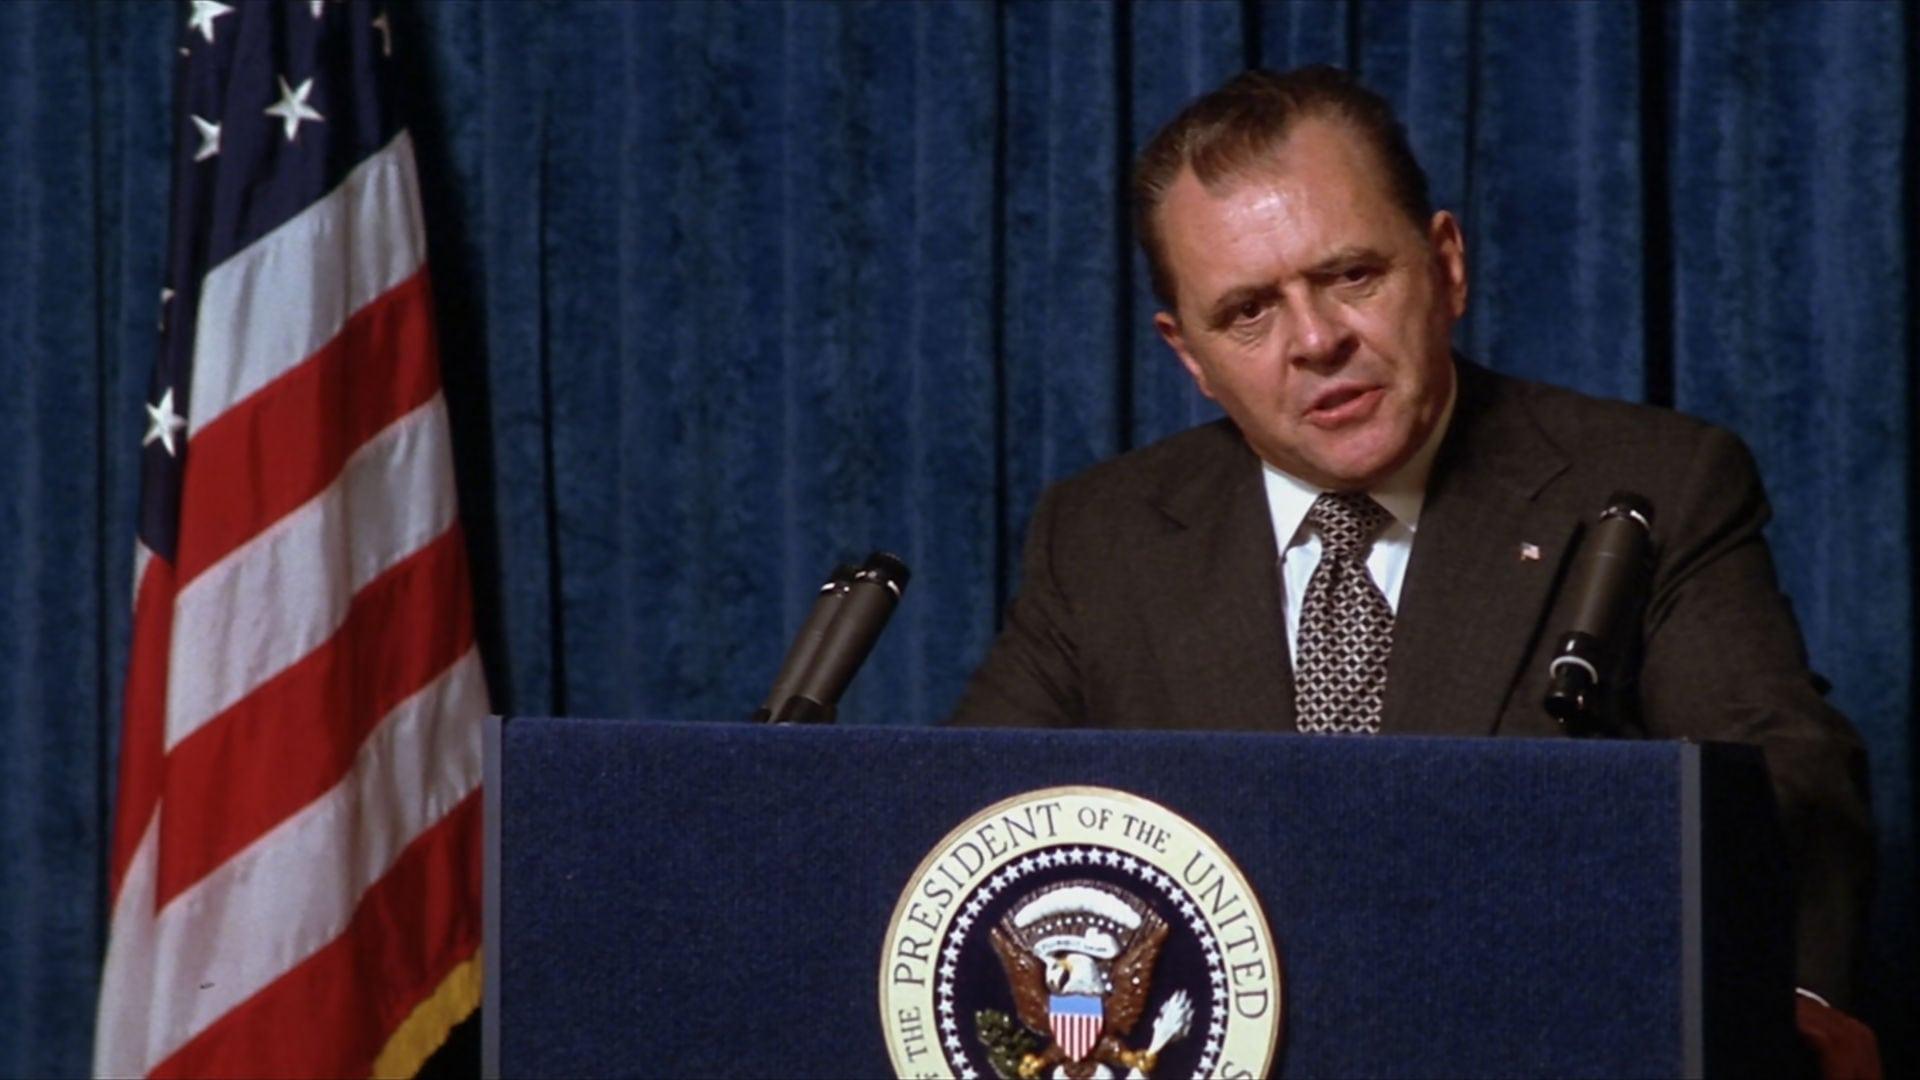 Nixon backdrop